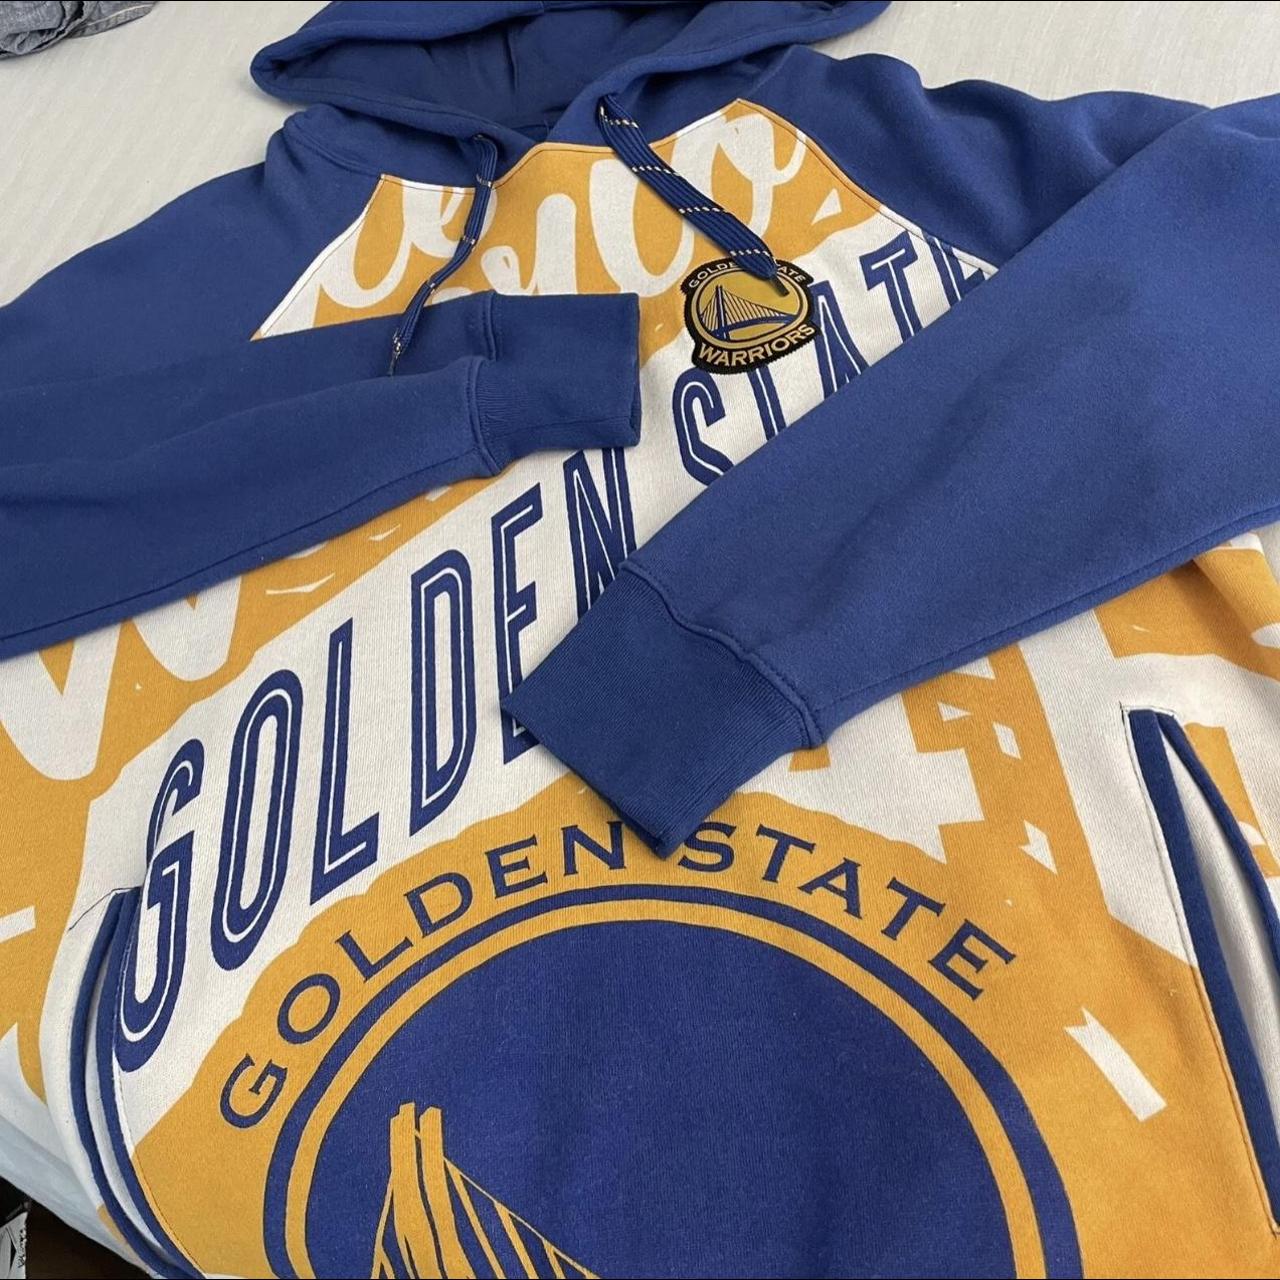 golden state warriors blue hoodie